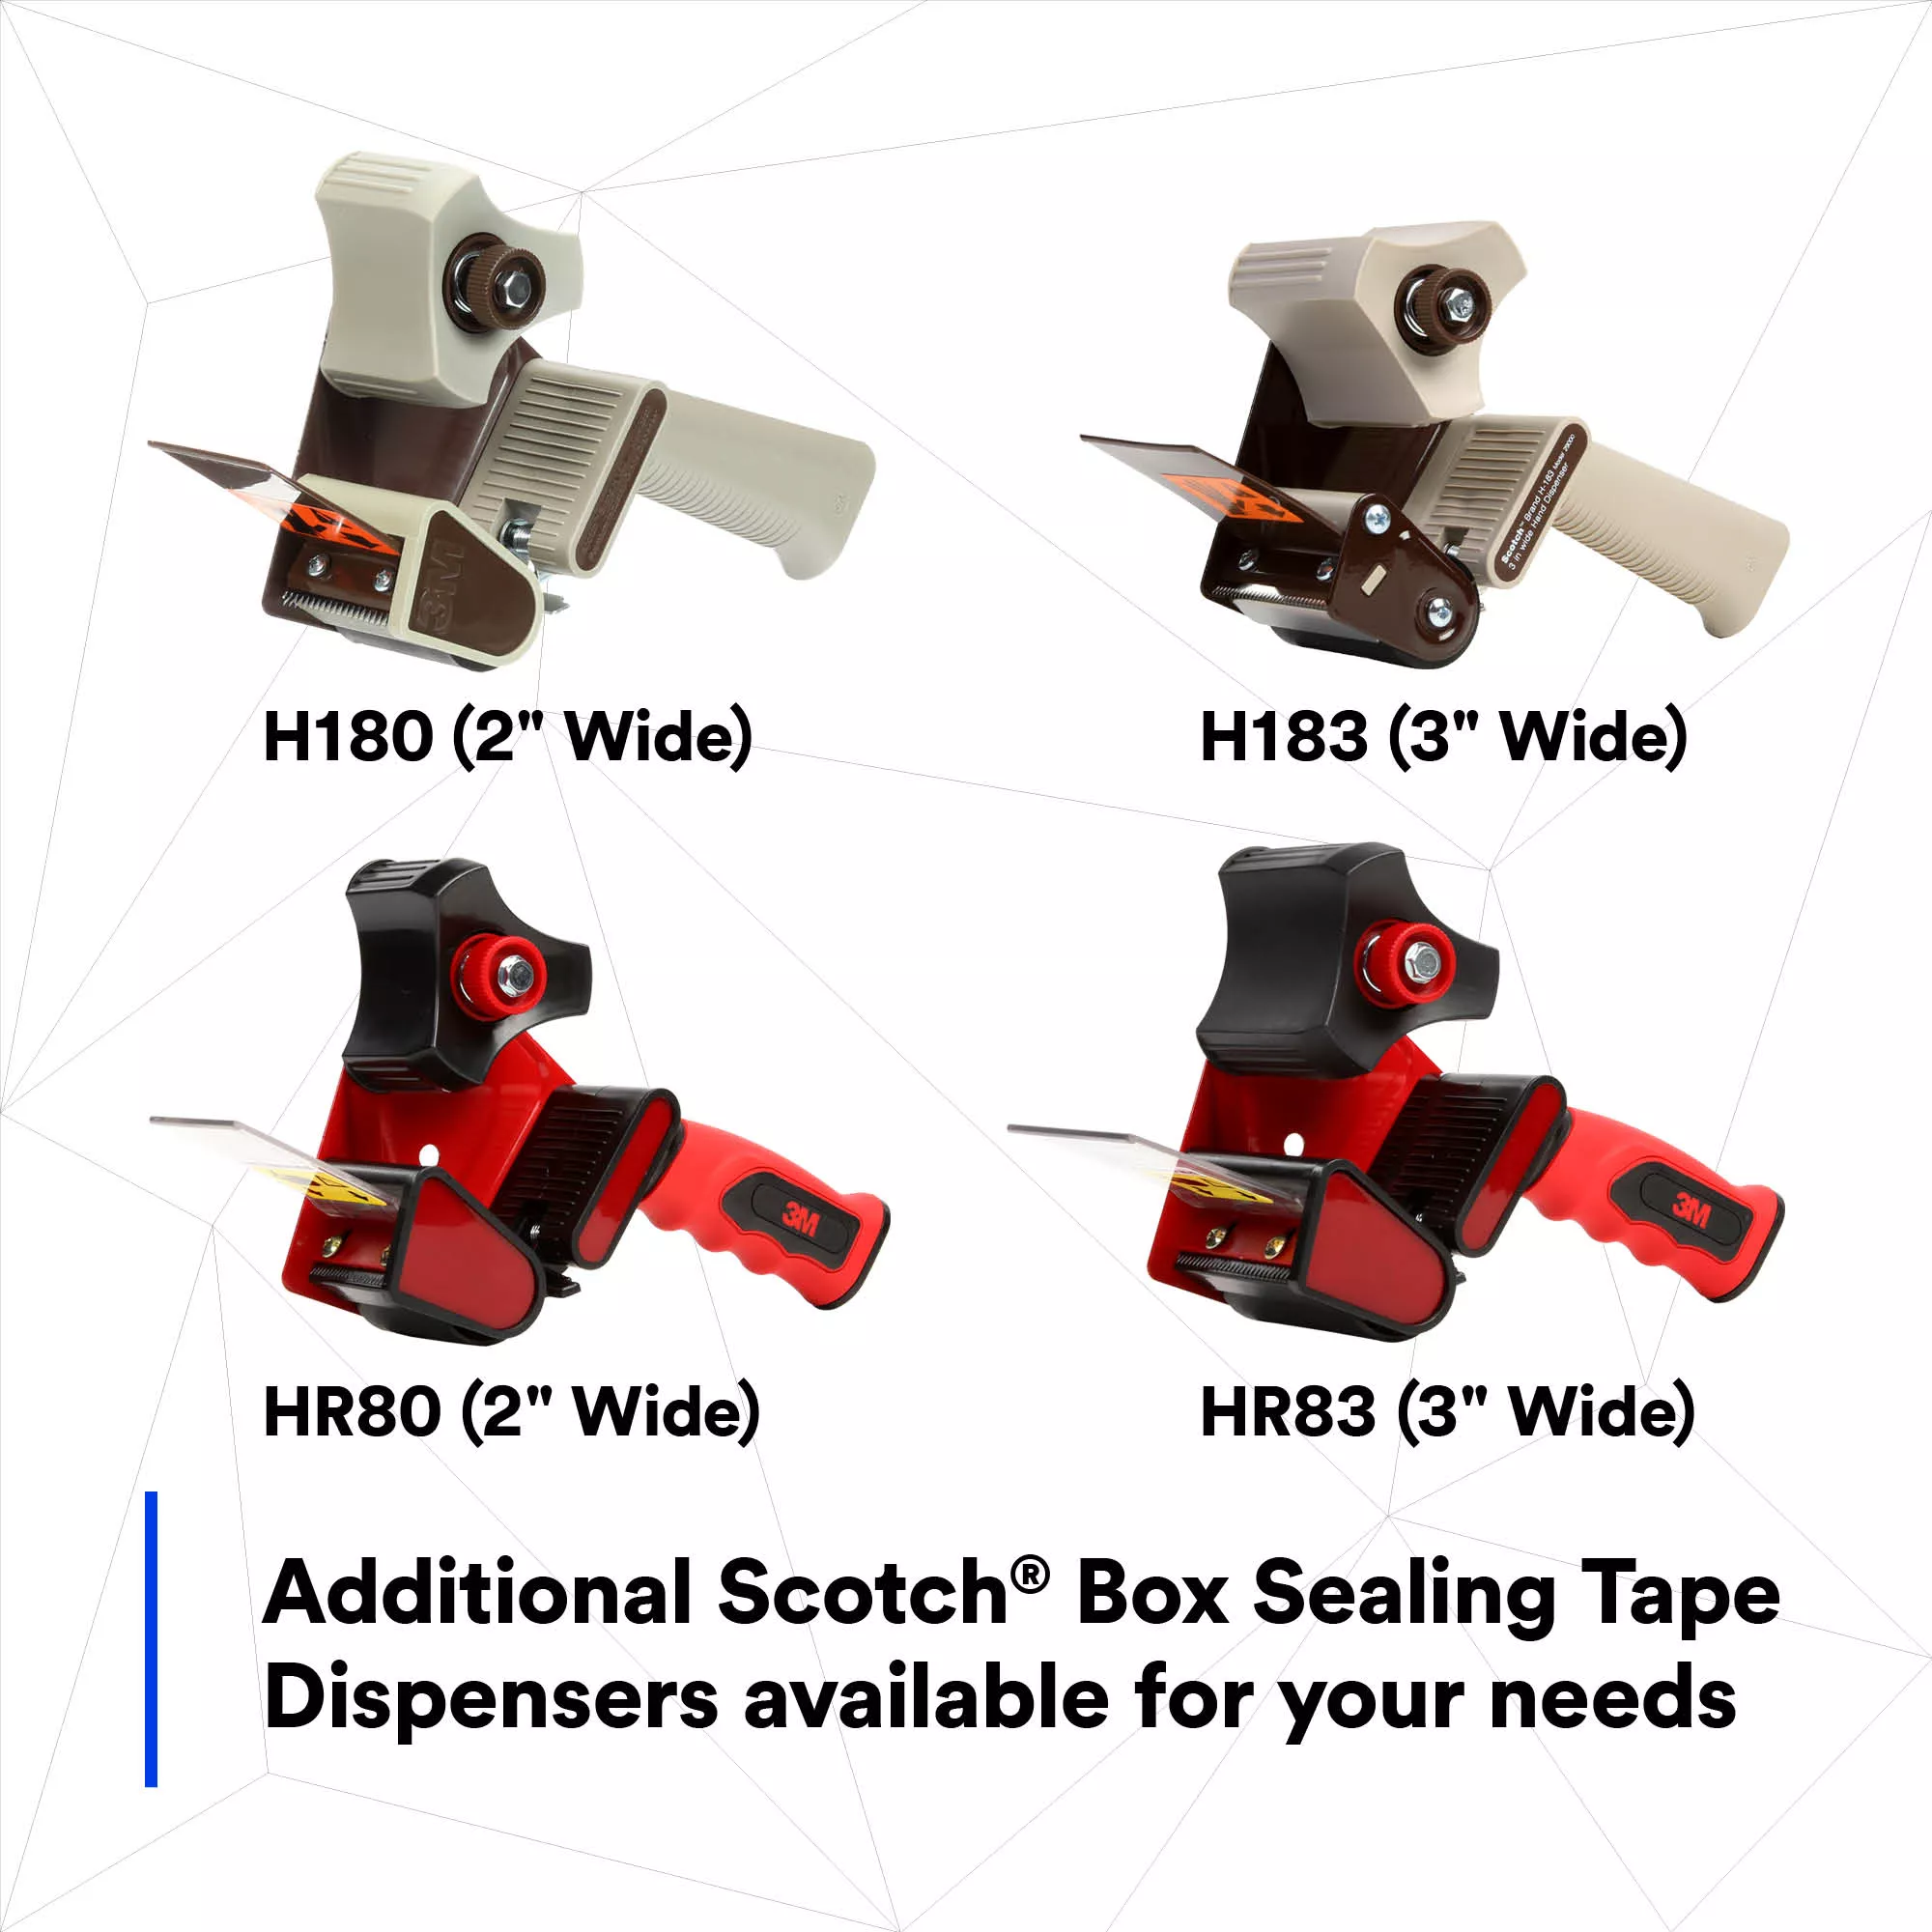 SKU 7000042997 | Scotch® Box Sealing Tape Hand Dispenser H180